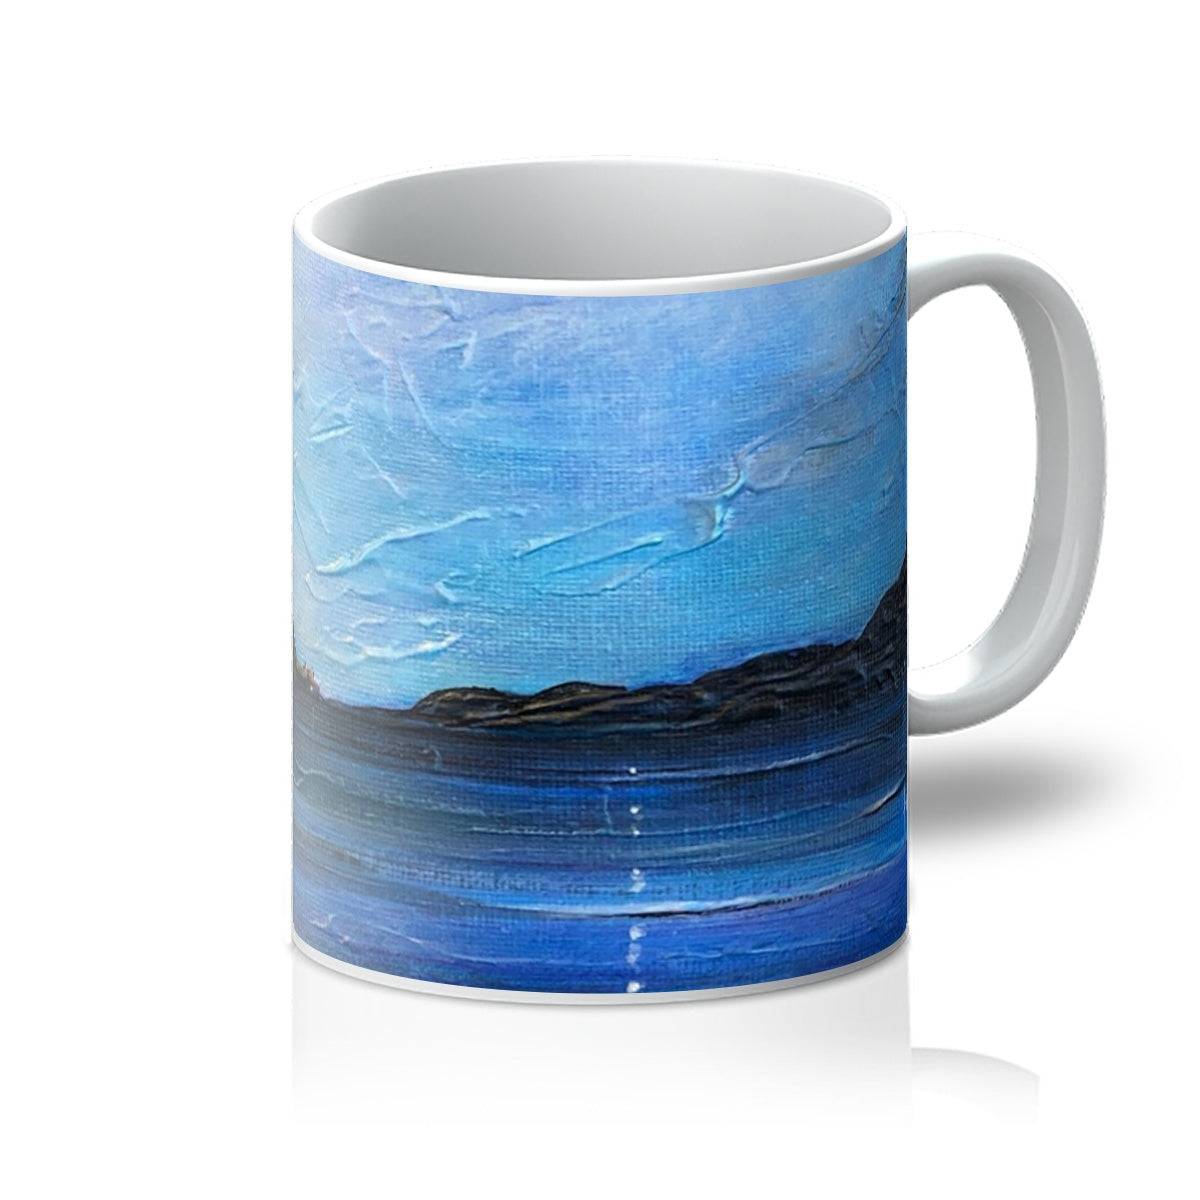 Loch Ness Moonlight Art Gifts Mug-Mugs-Scottish Lochs & Mountains Art Gallery-11oz-White-Paintings, Prints, Homeware, Art Gifts From Scotland By Scottish Artist Kevin Hunter